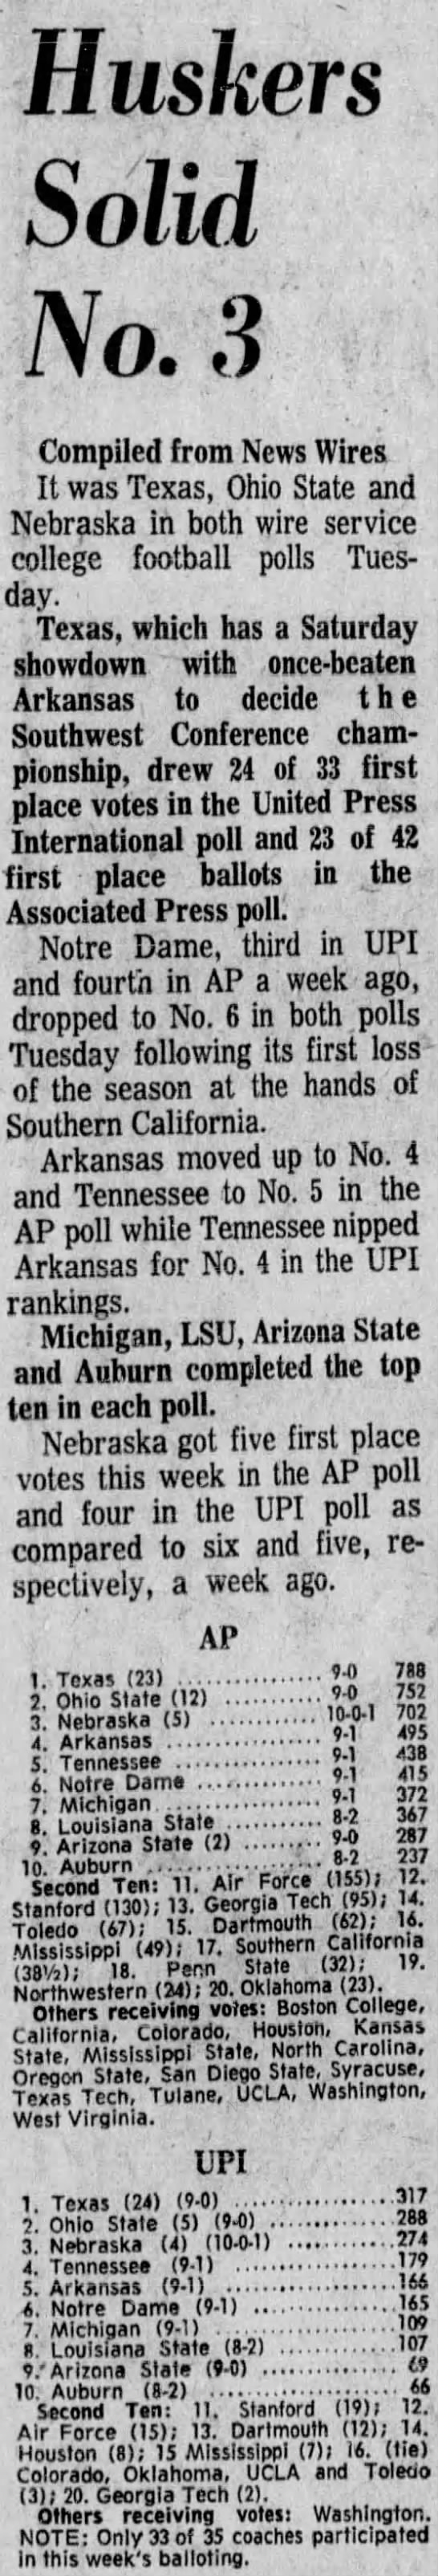 1970.12.01 College football polls - 